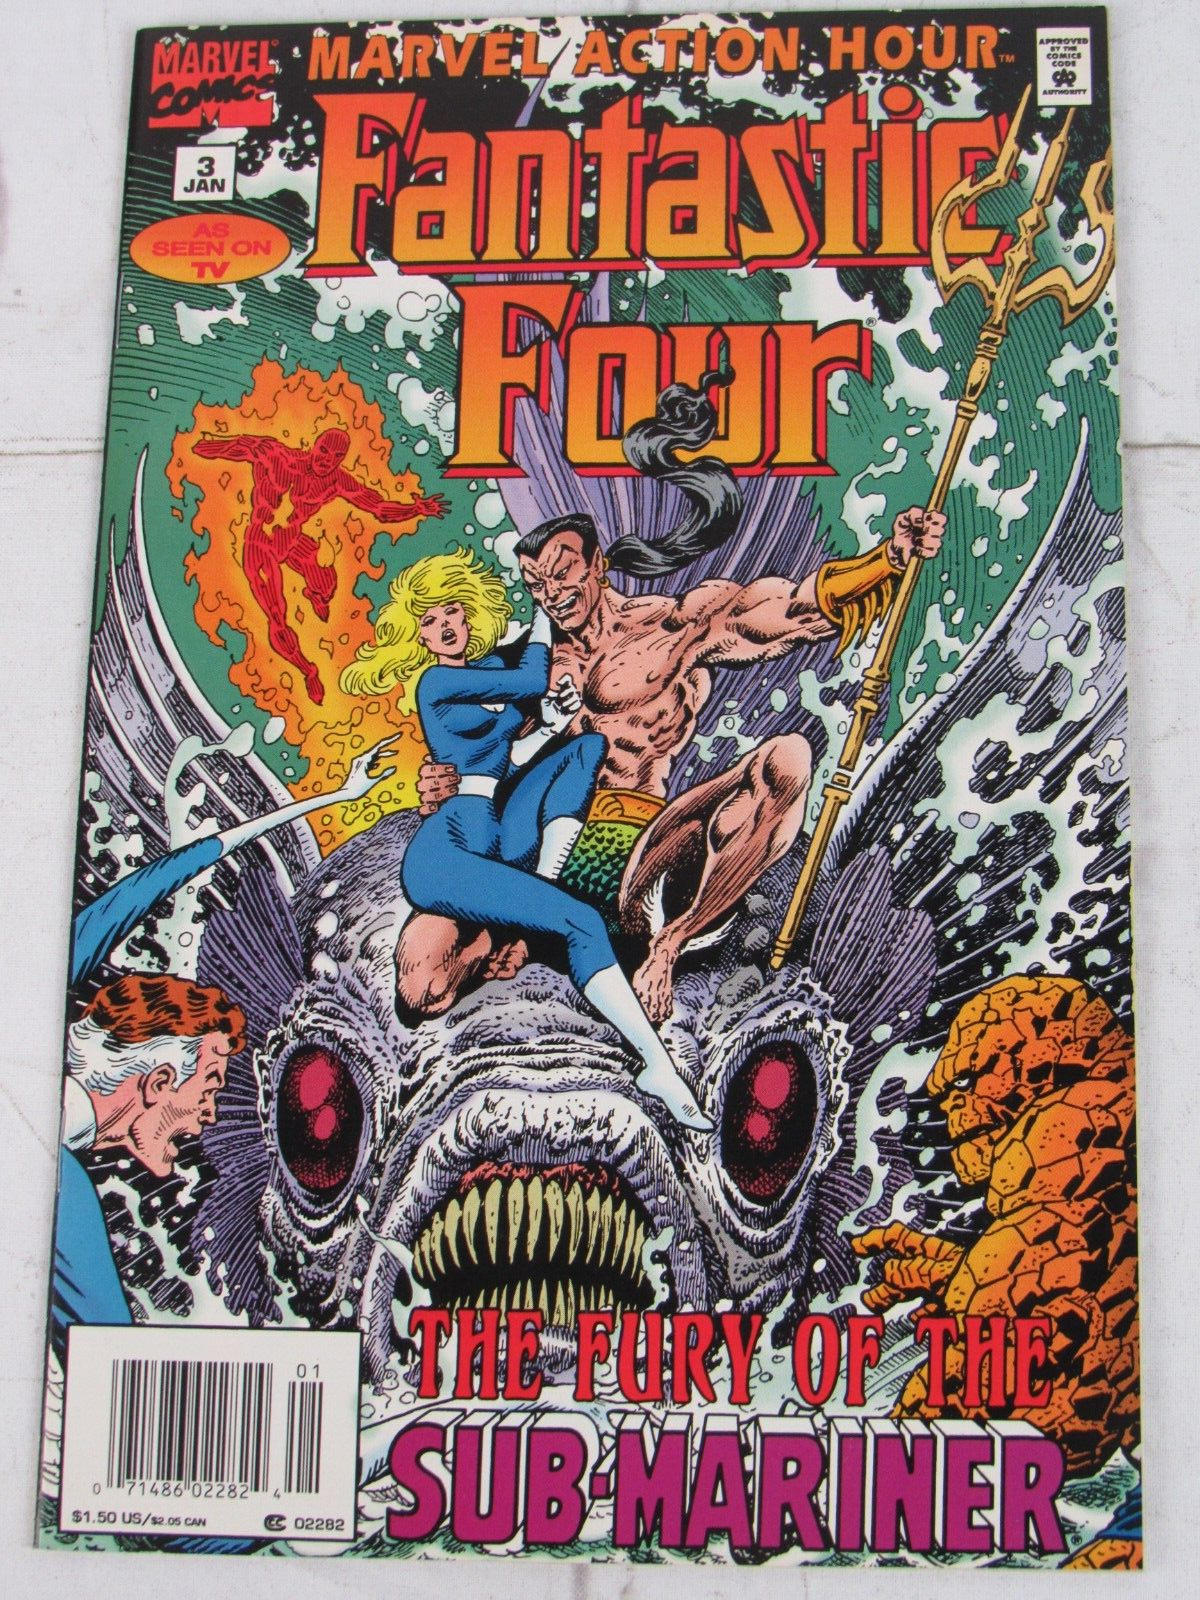 Marvel Action Hour: Fantastic Four #3 Jan. 1995 Marvel Comics Newsstand Edition